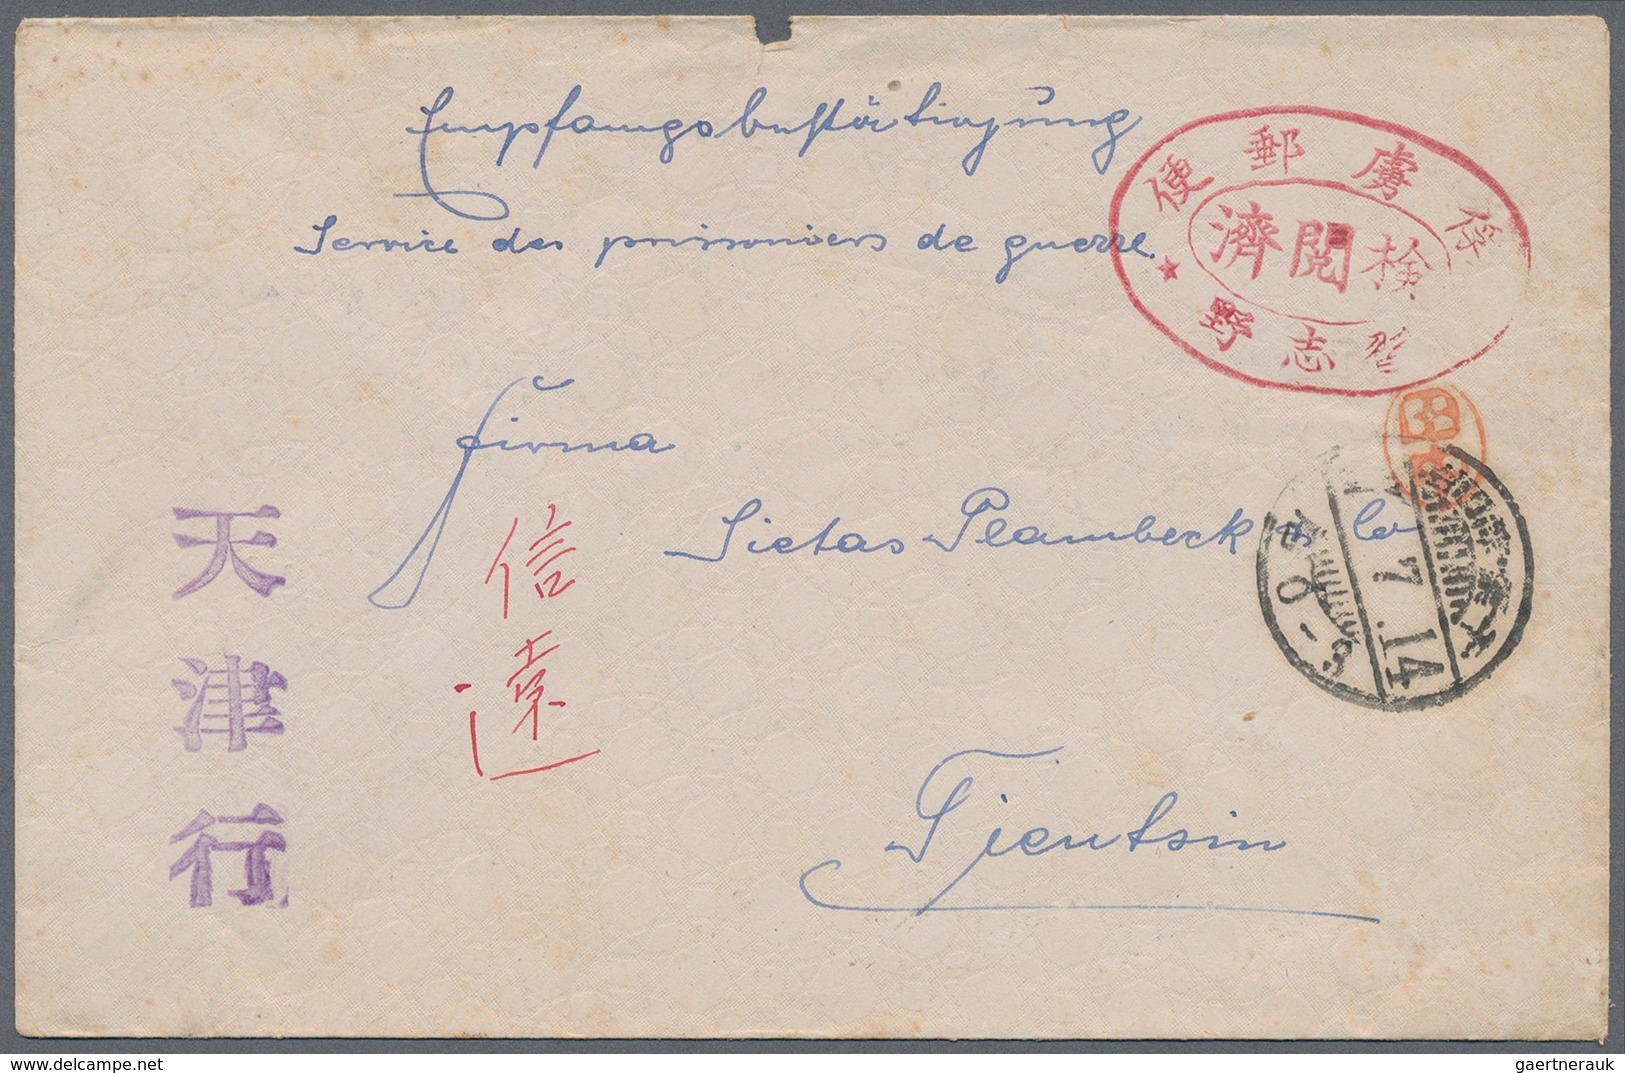 Lagerpost Tsingtau: Narashino, 1915/19, nine items: money letter envelope insured for 100 Y. send by